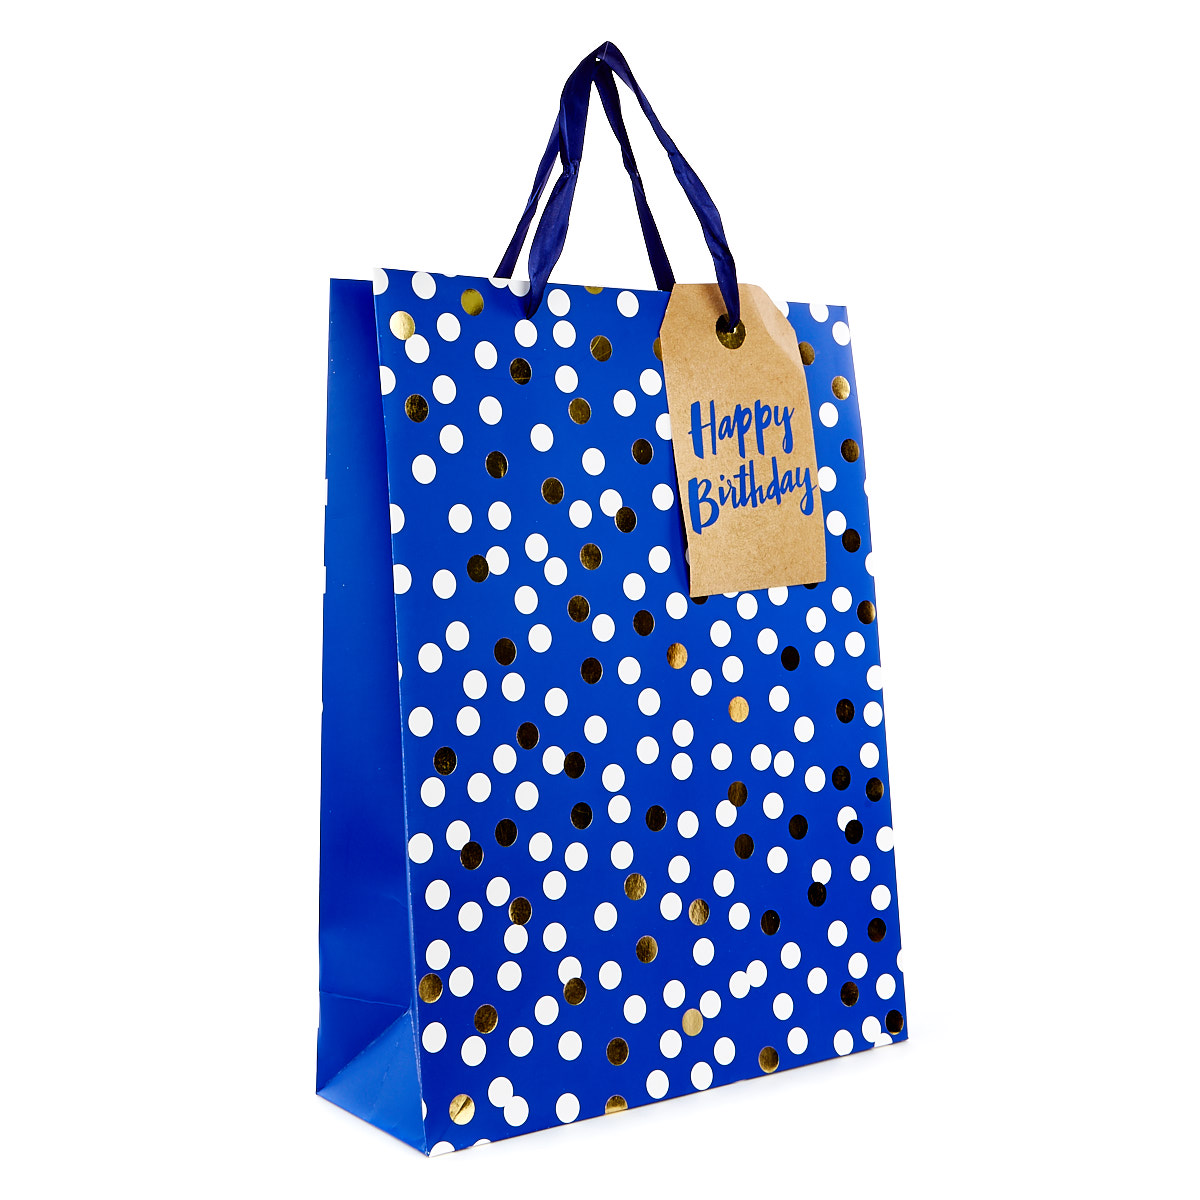 Extra Large Portrait Gift Bag - Blue Spots, Happy Birthday 